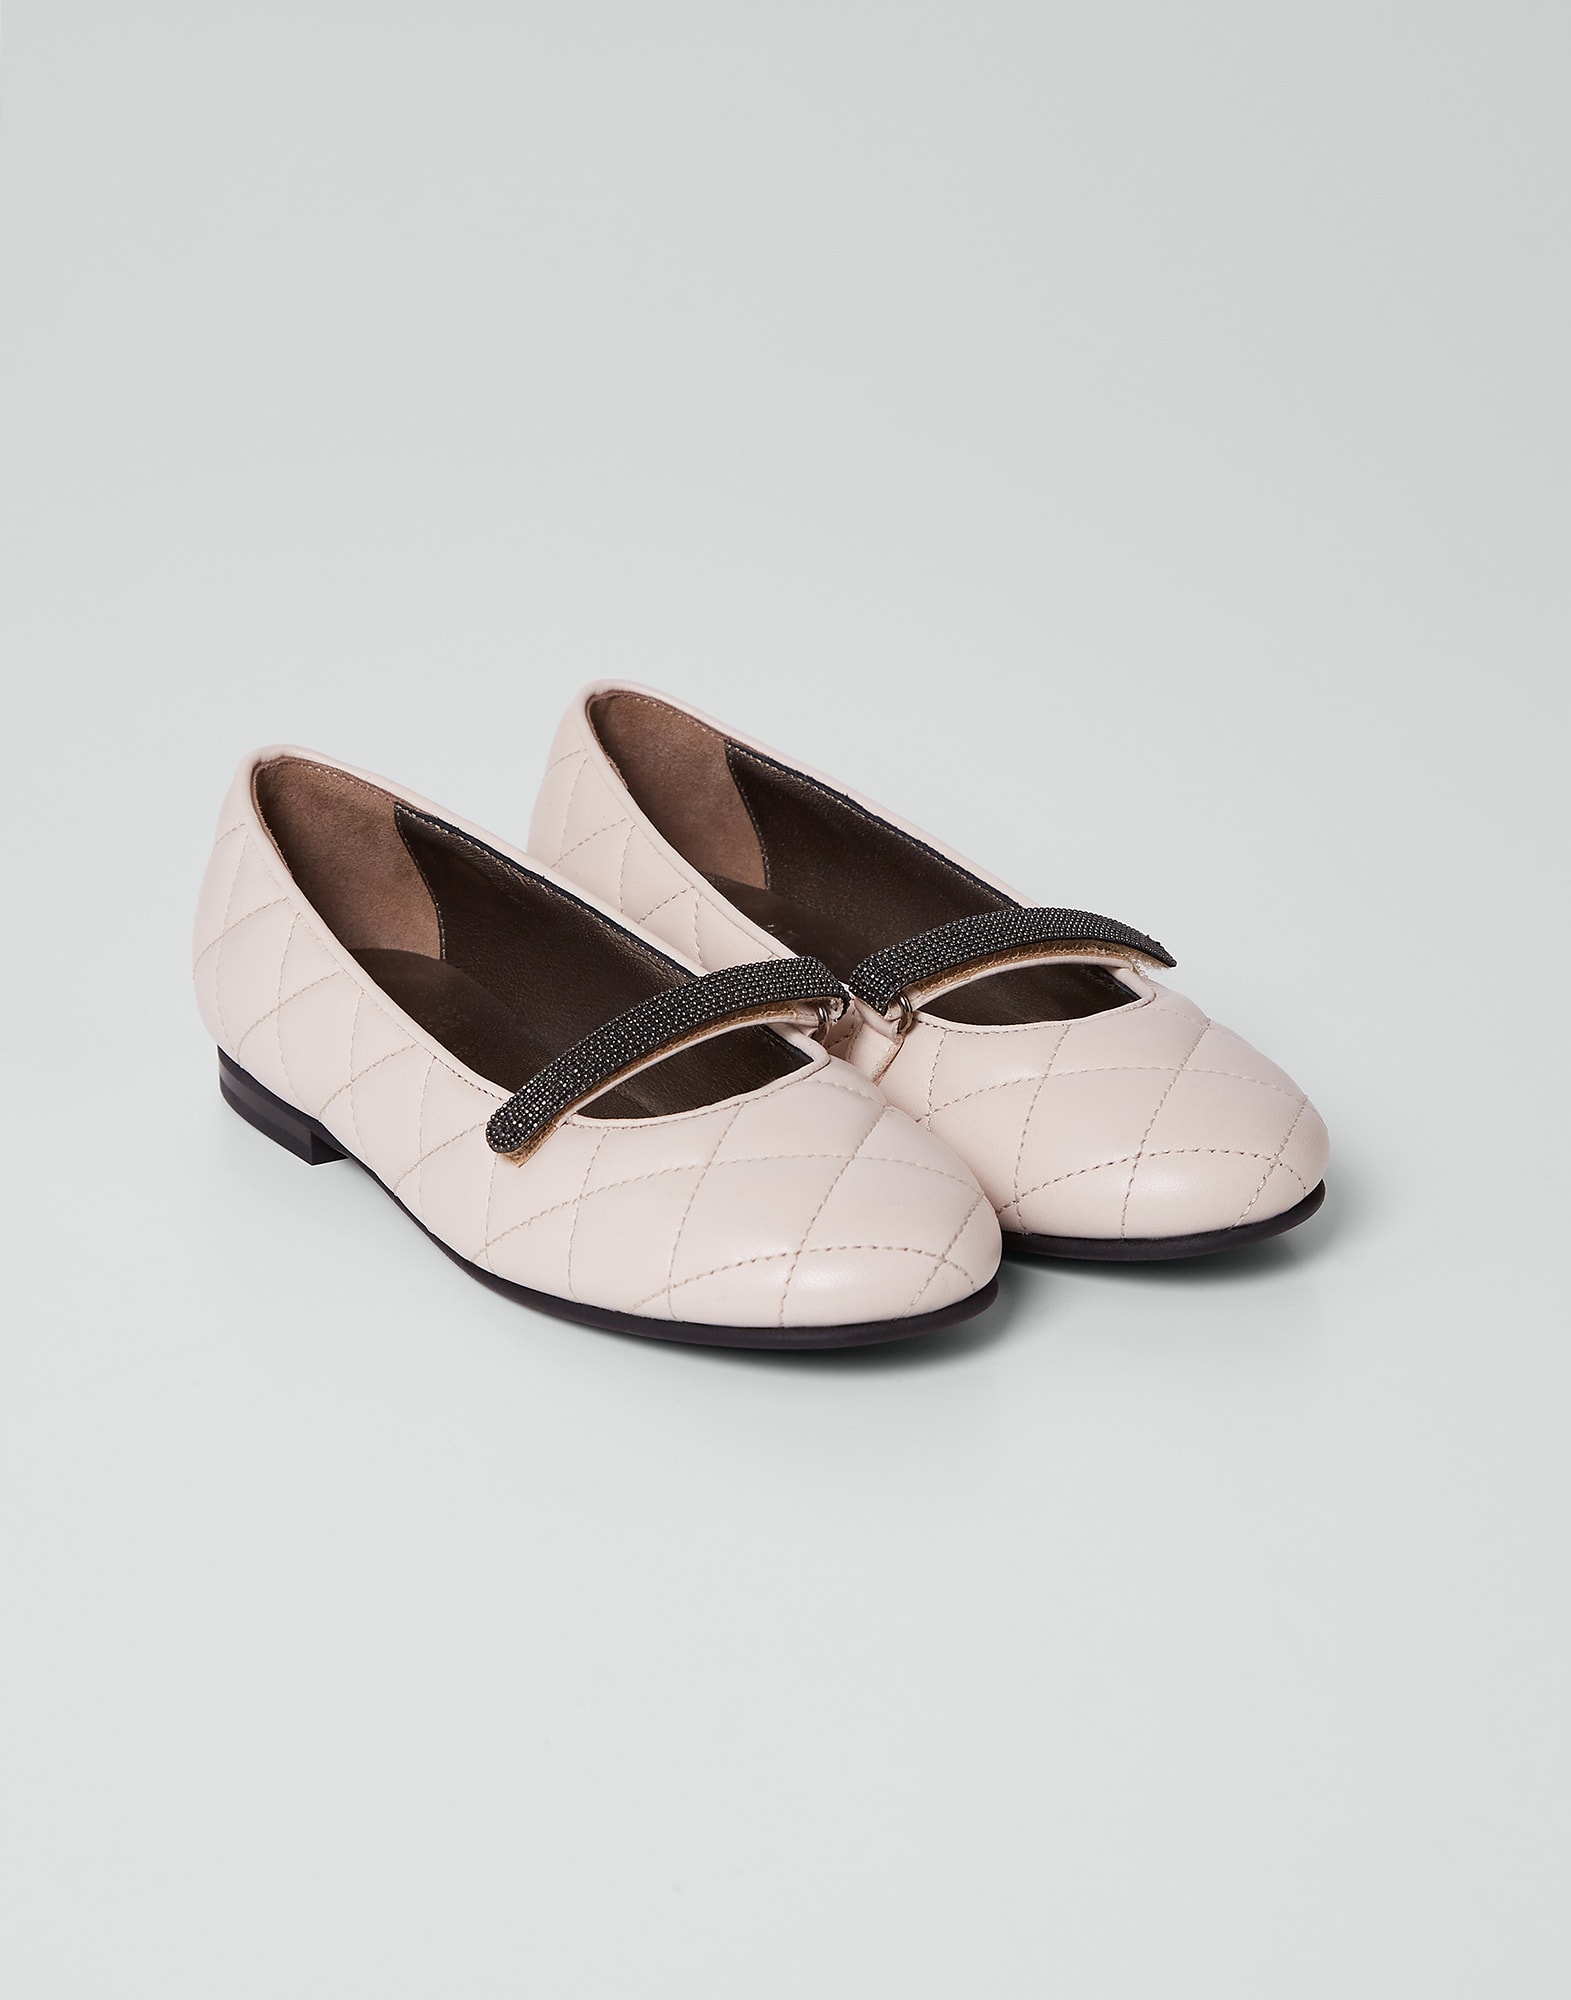 Chaussures plates en nappa Soft Ivoire Fille - Brunello Cucinelli